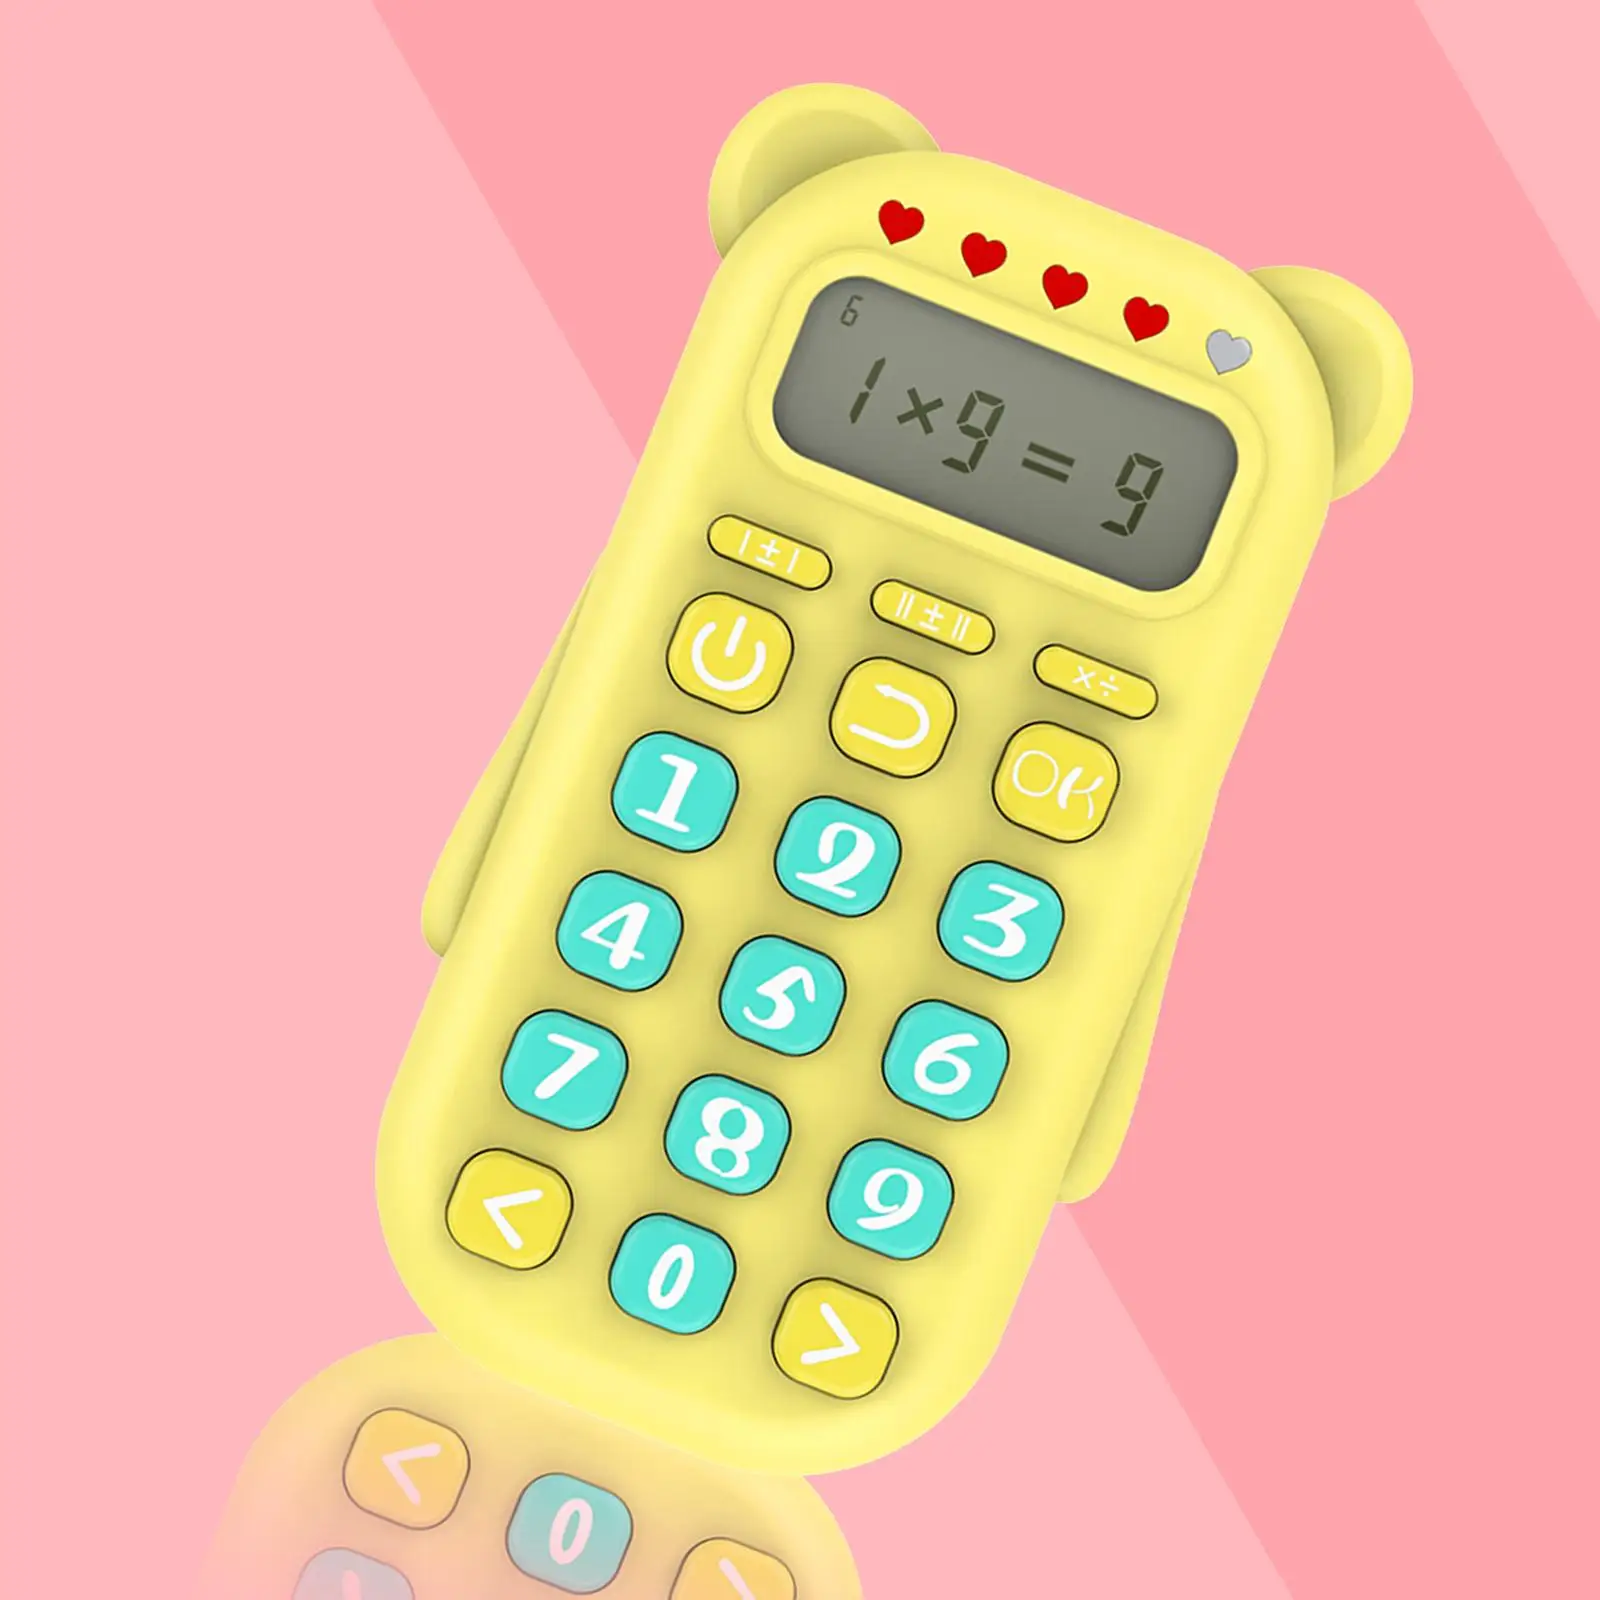 Portable Electronic Calculator Teaching Aids Functional Math Calculation Electronic Math Game for Boys Girls Toddler Kids